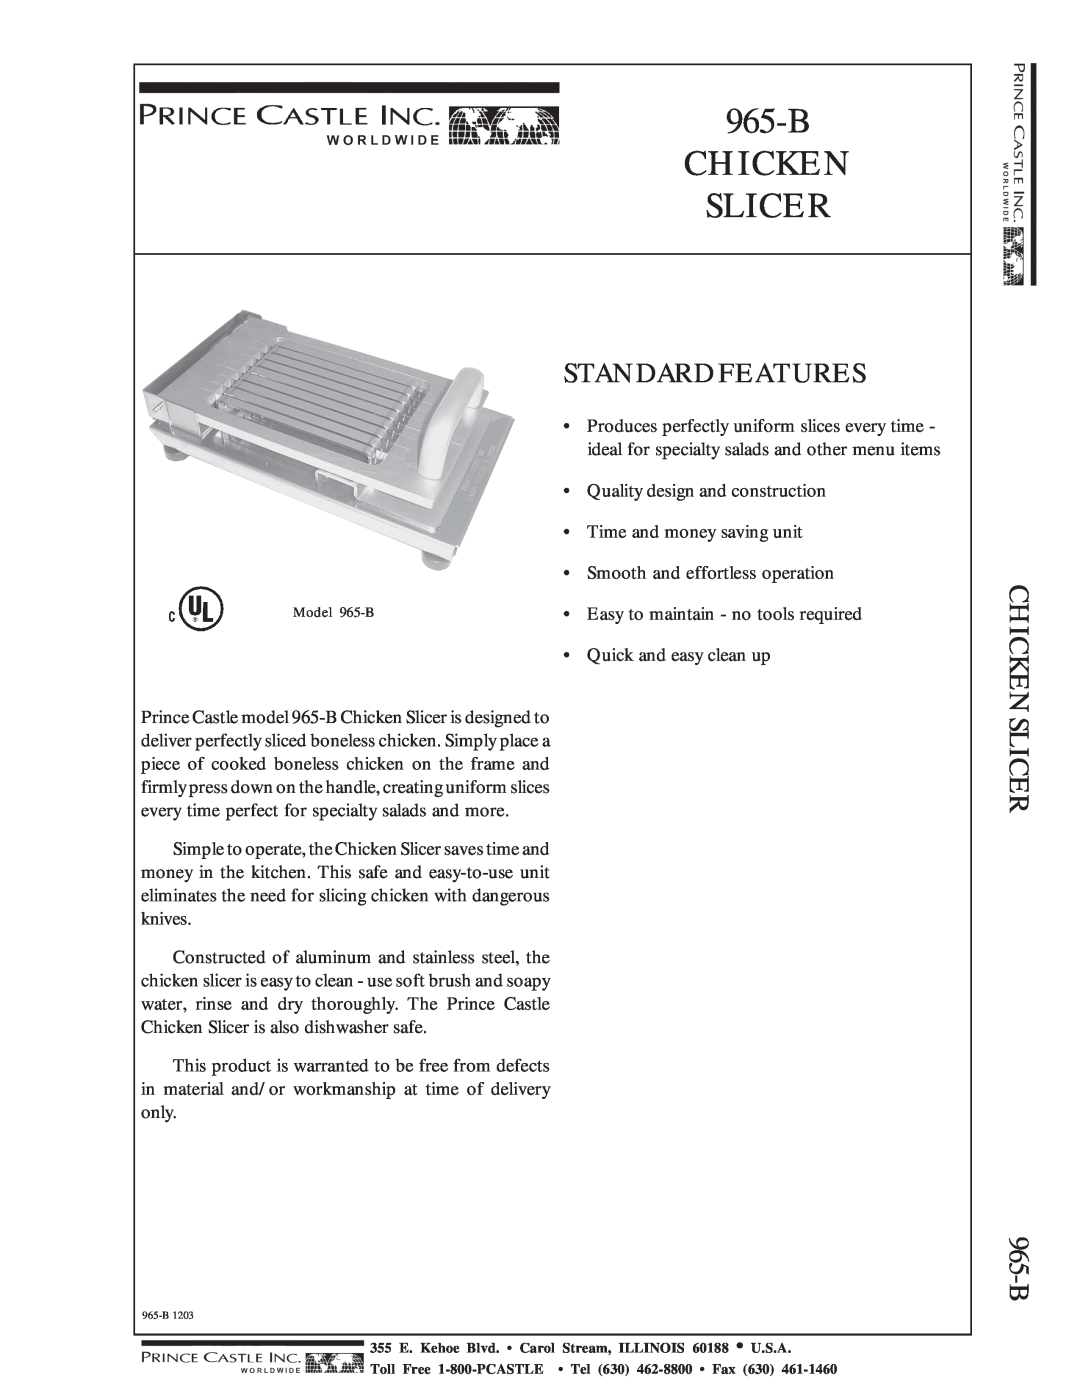 Prince Castle manual Standardfeatures, CHICKENSLICER 965-B, B Chicken Slicer 